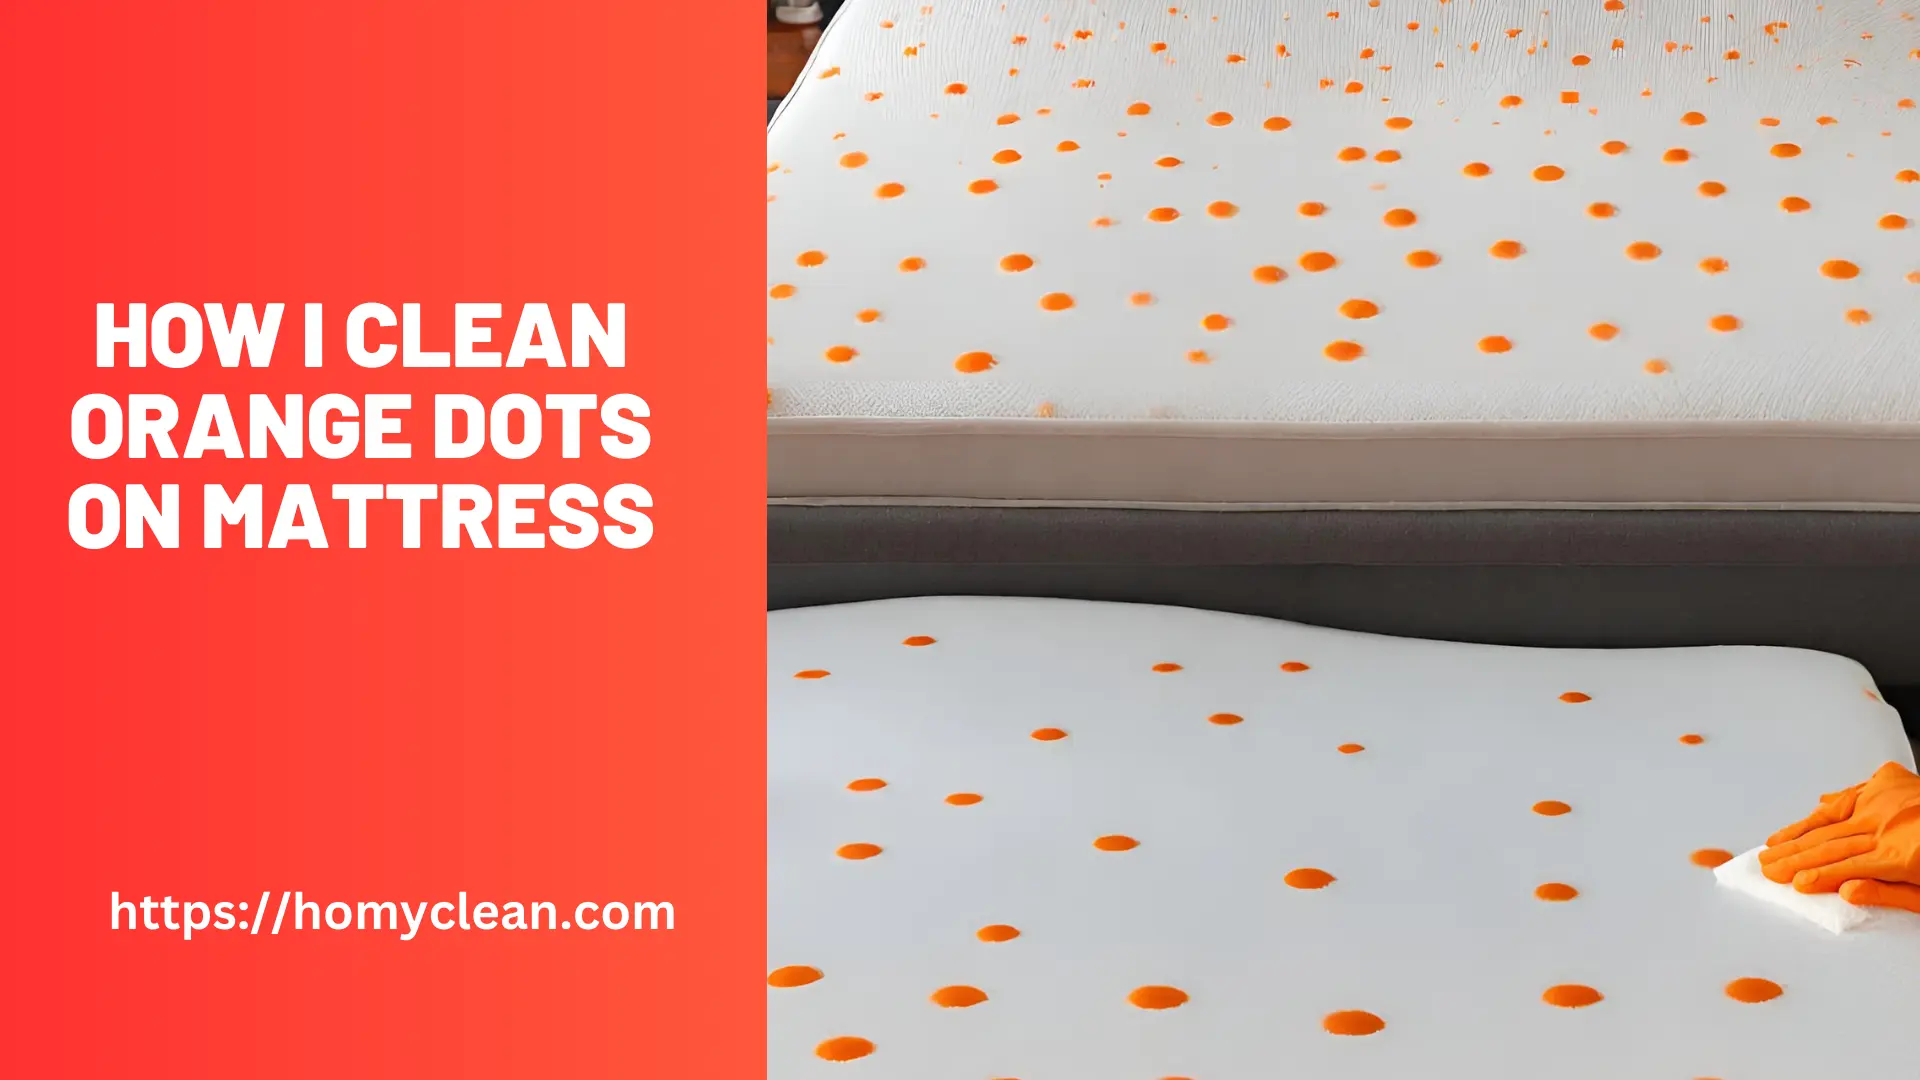 How I clean Orange dots on mattress